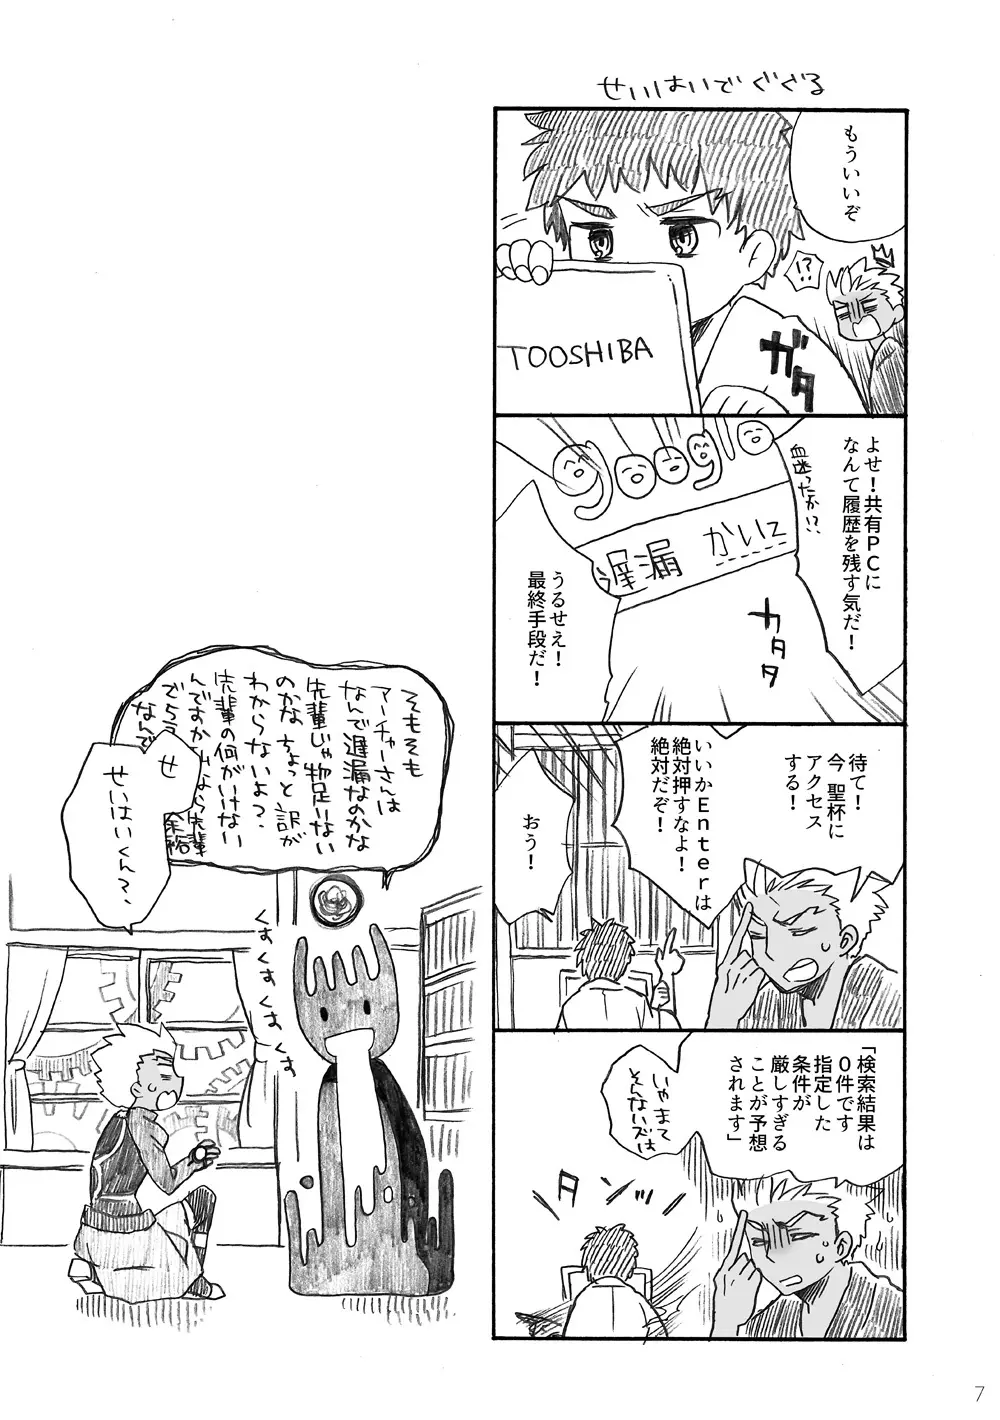 弓士本 - page69